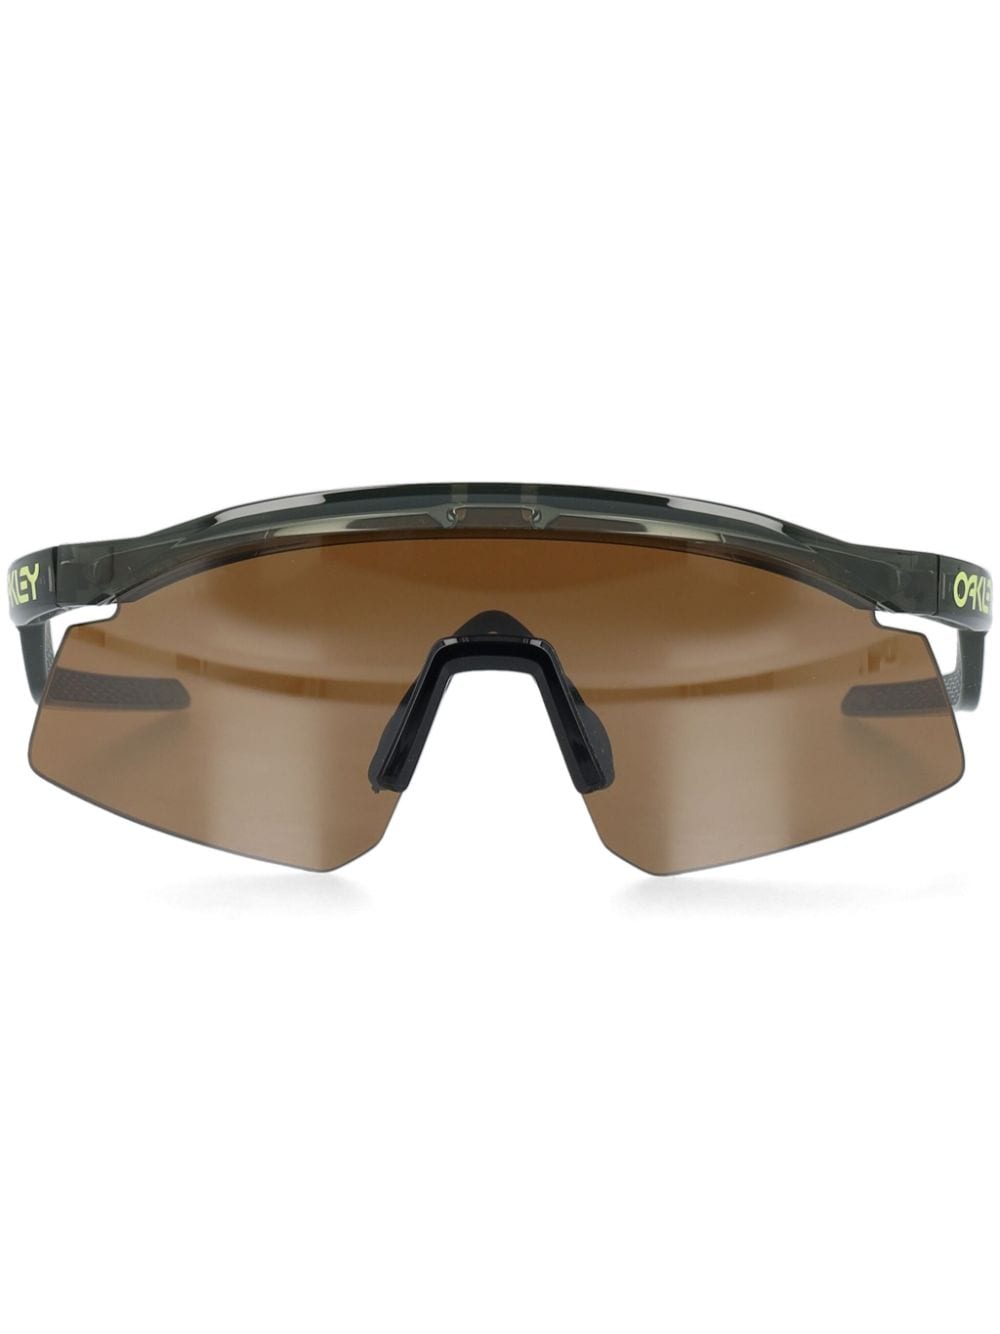 Hydra shield-frame sunglasses<BR/>